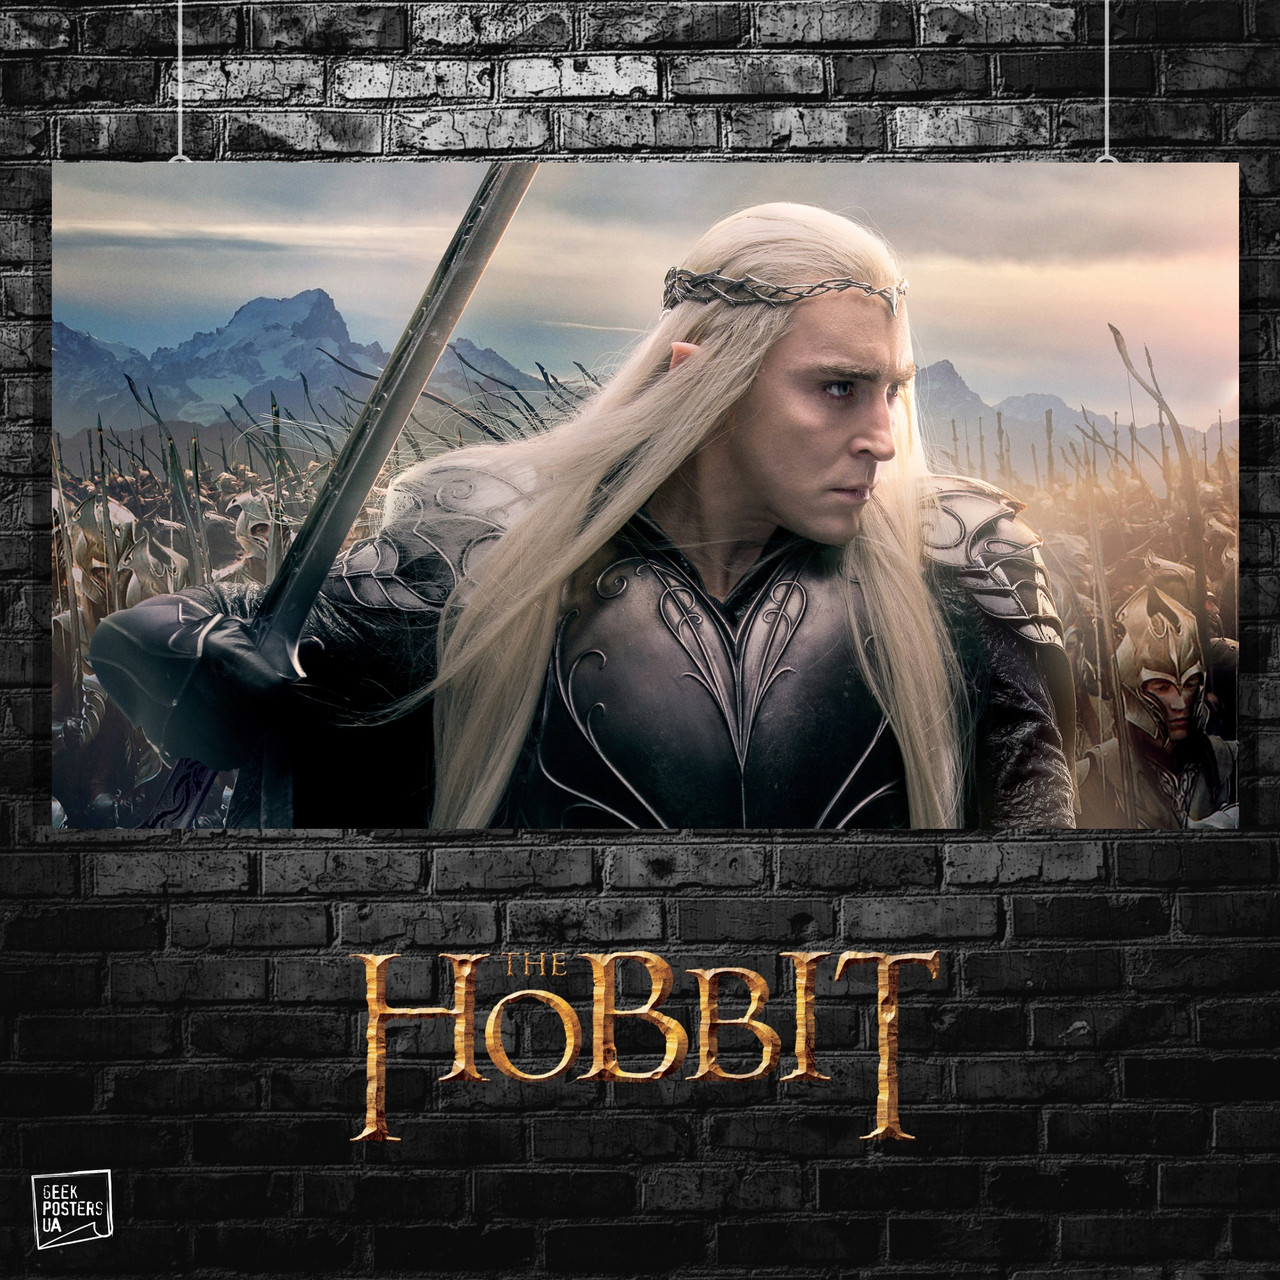 

Постер Трандуил. Властелин Колец, Lord Of The Rings, Хоббит, Hobbit. Размер 60x107см (A1). Глянцевая бумага